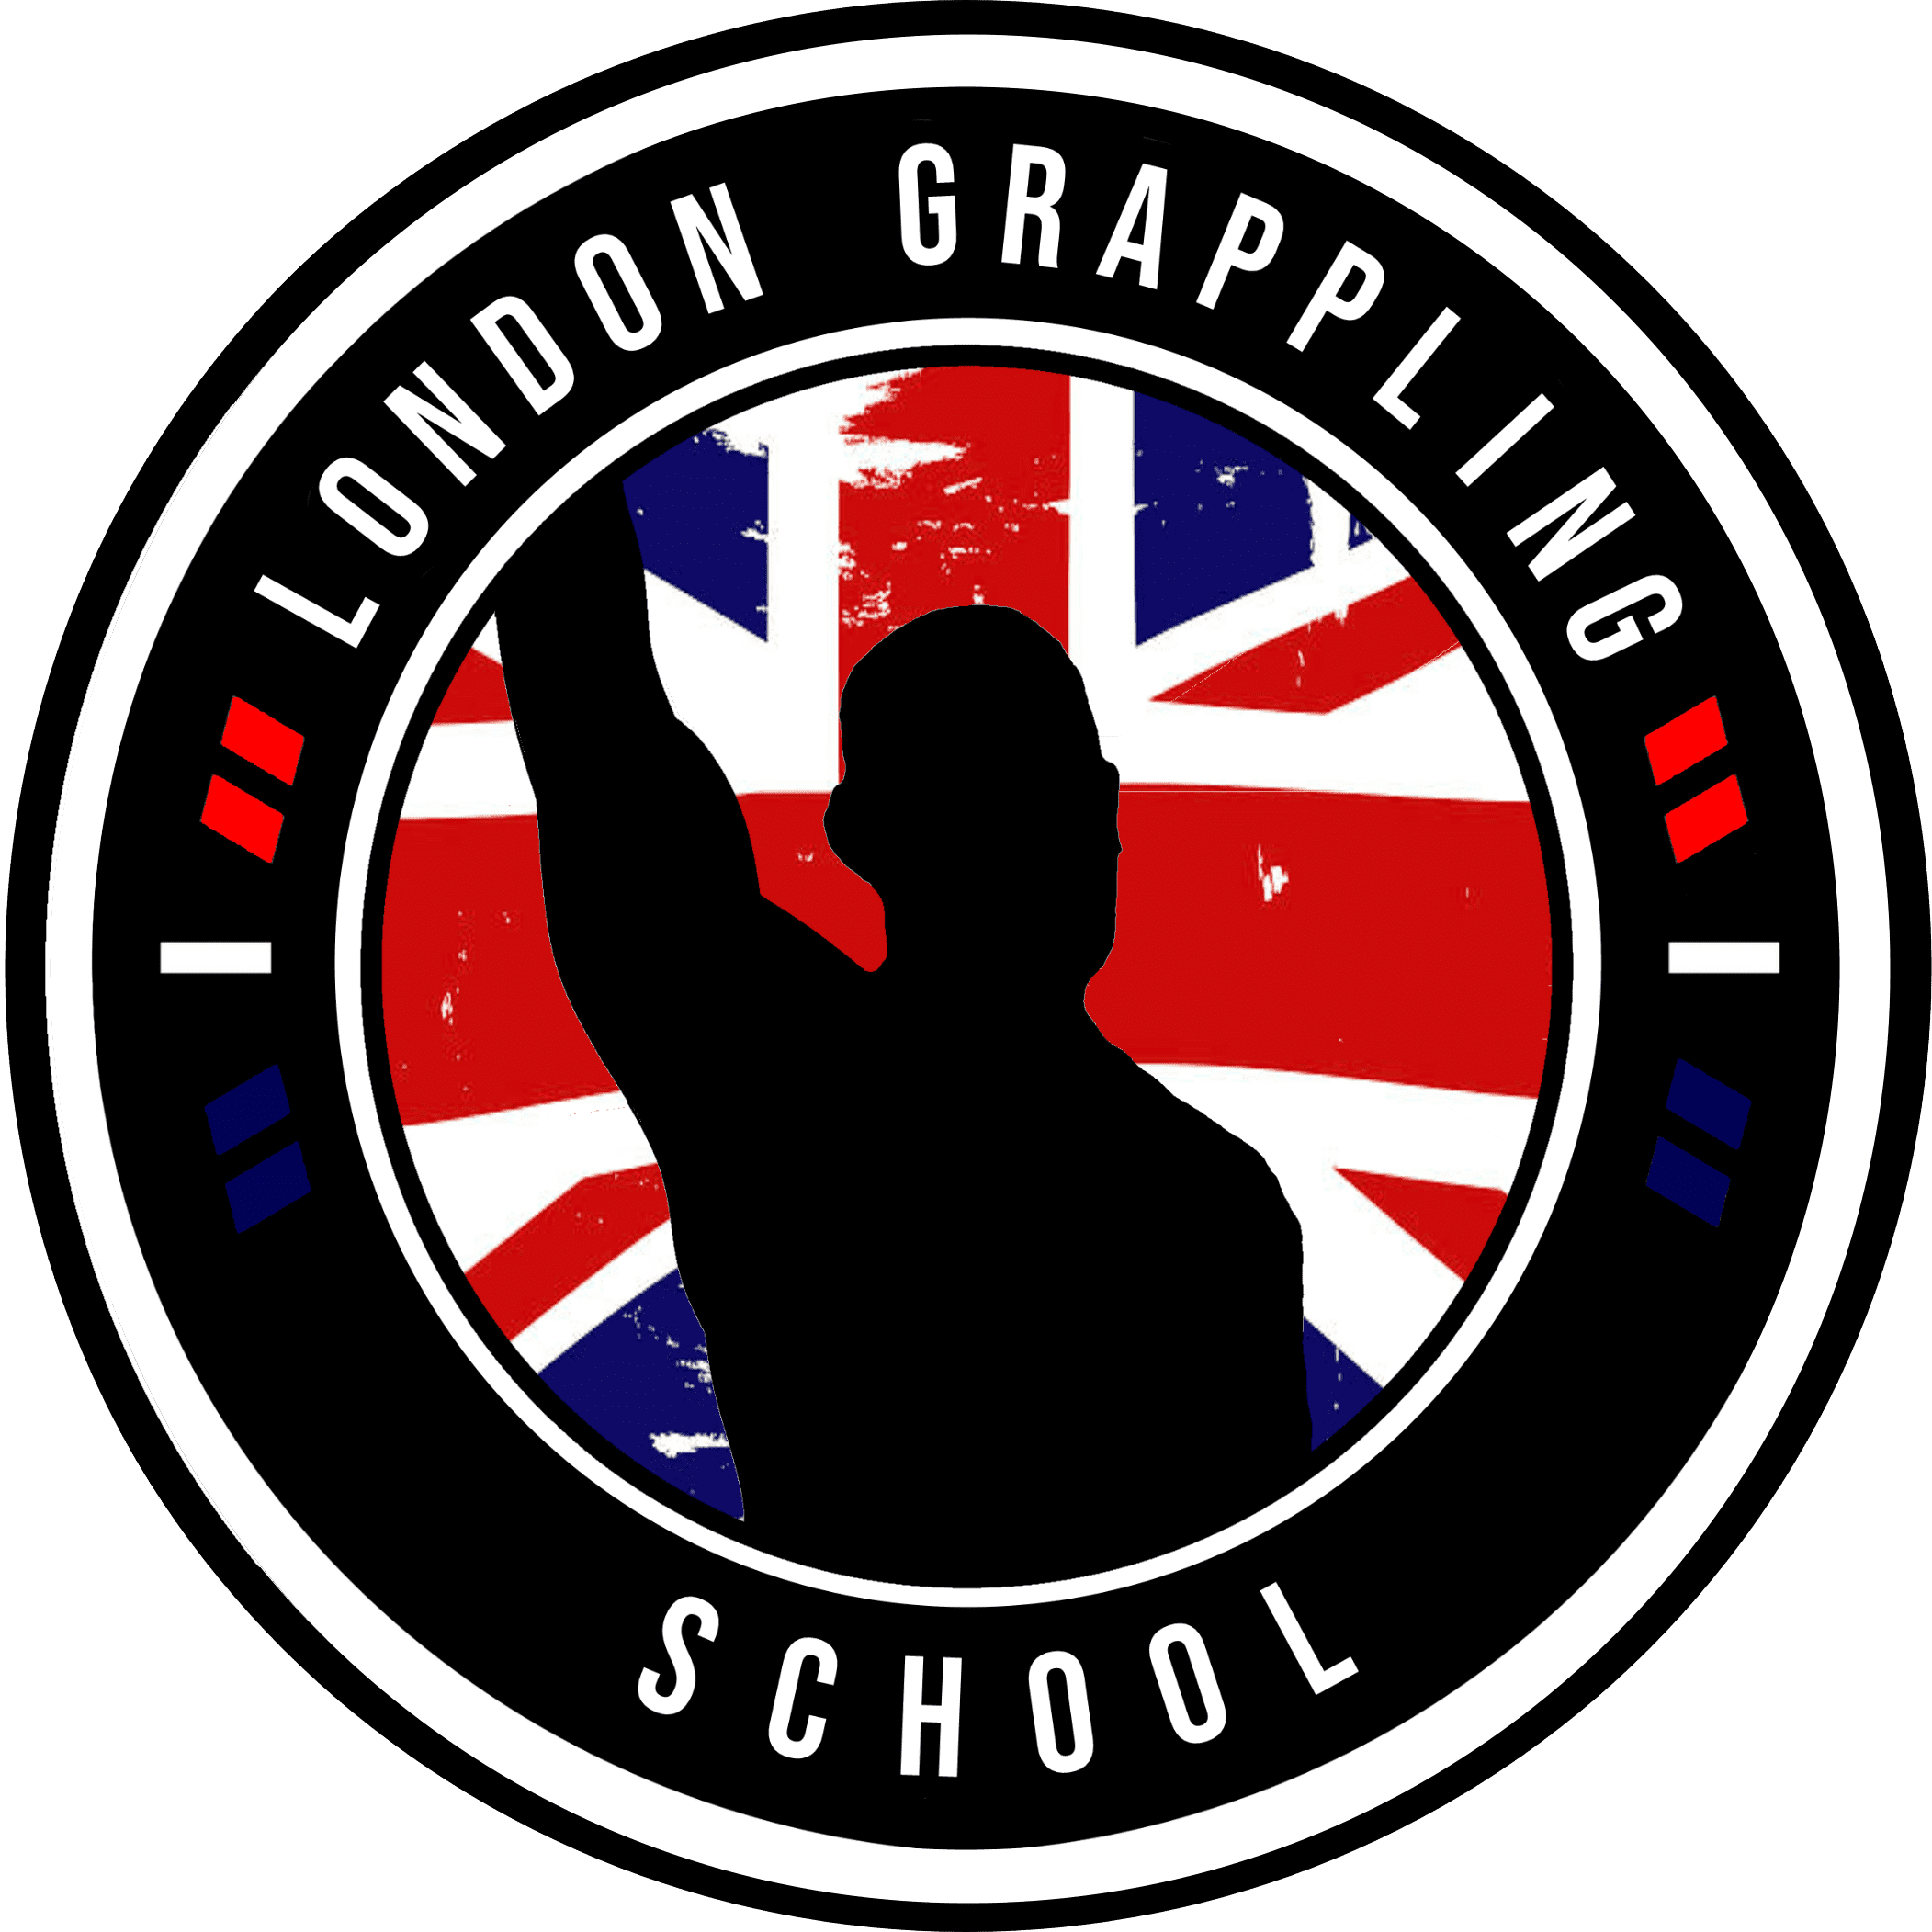 London Grappling School